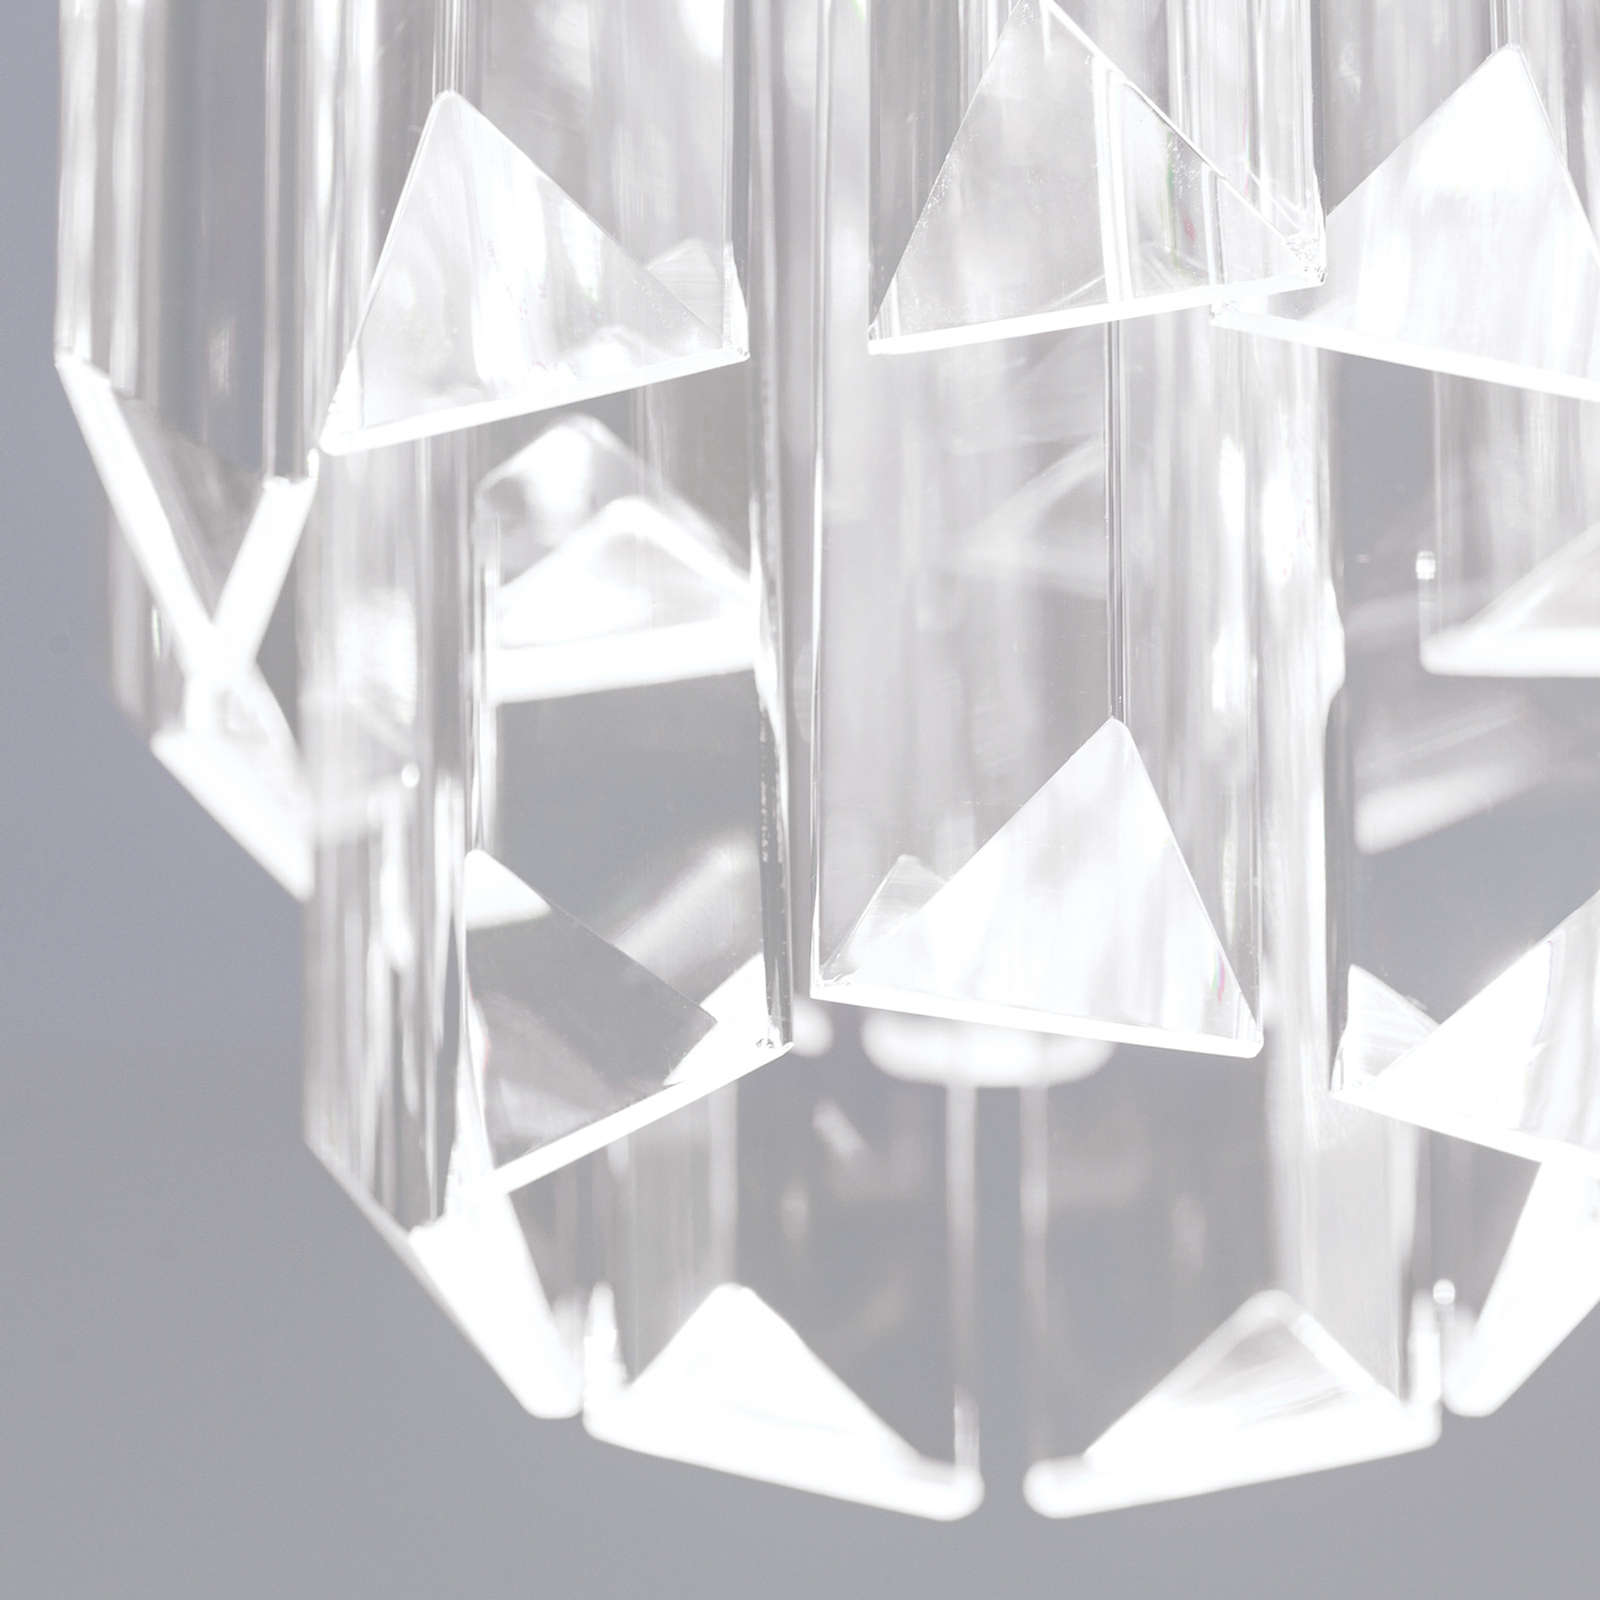 Prism LED ceiling light crystal glass Ø10cm chrome